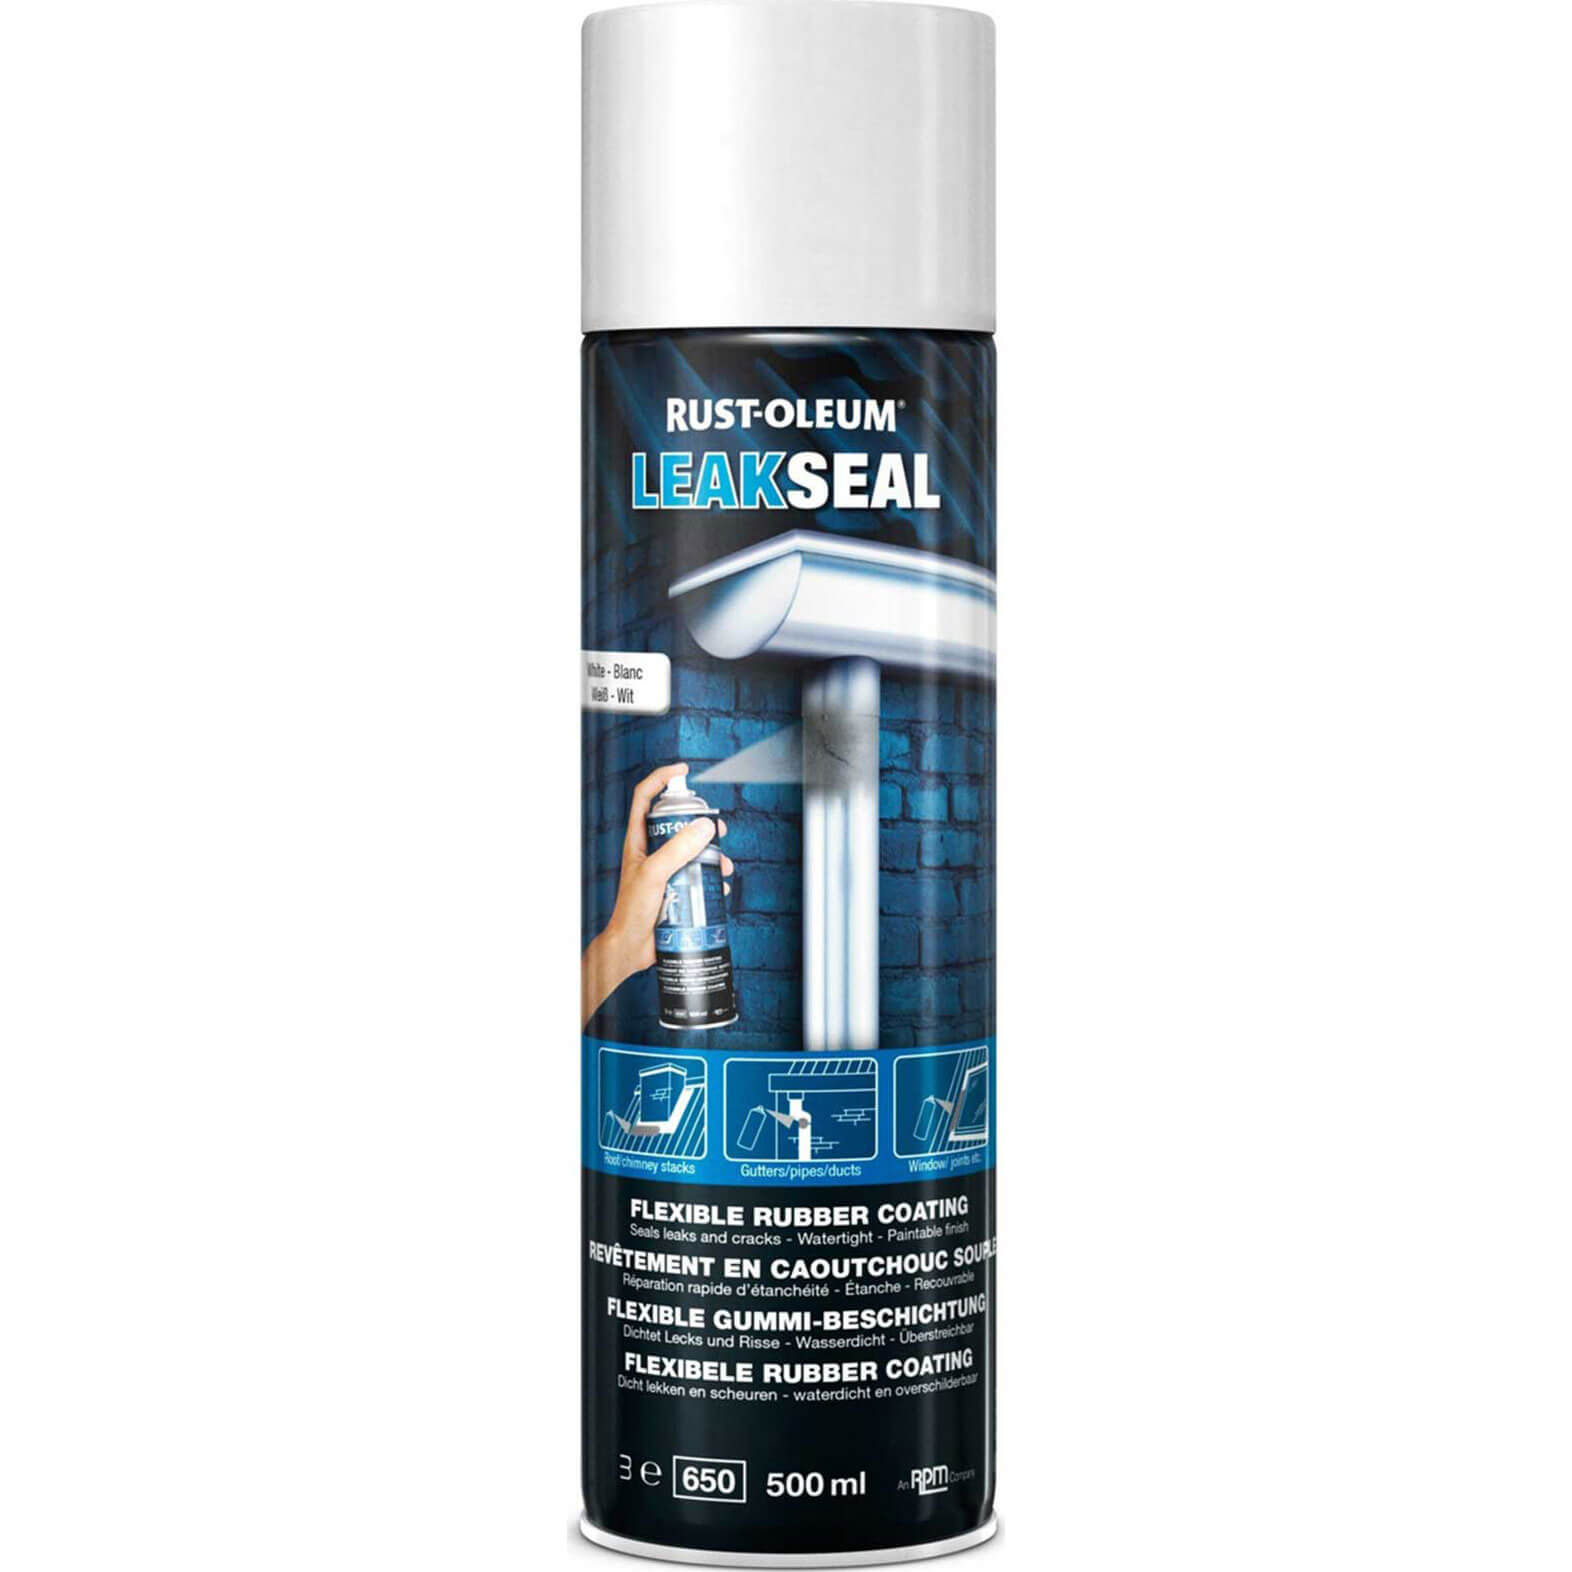 Image of Rust Oleum Leak Seal Spray Paint White 500ml